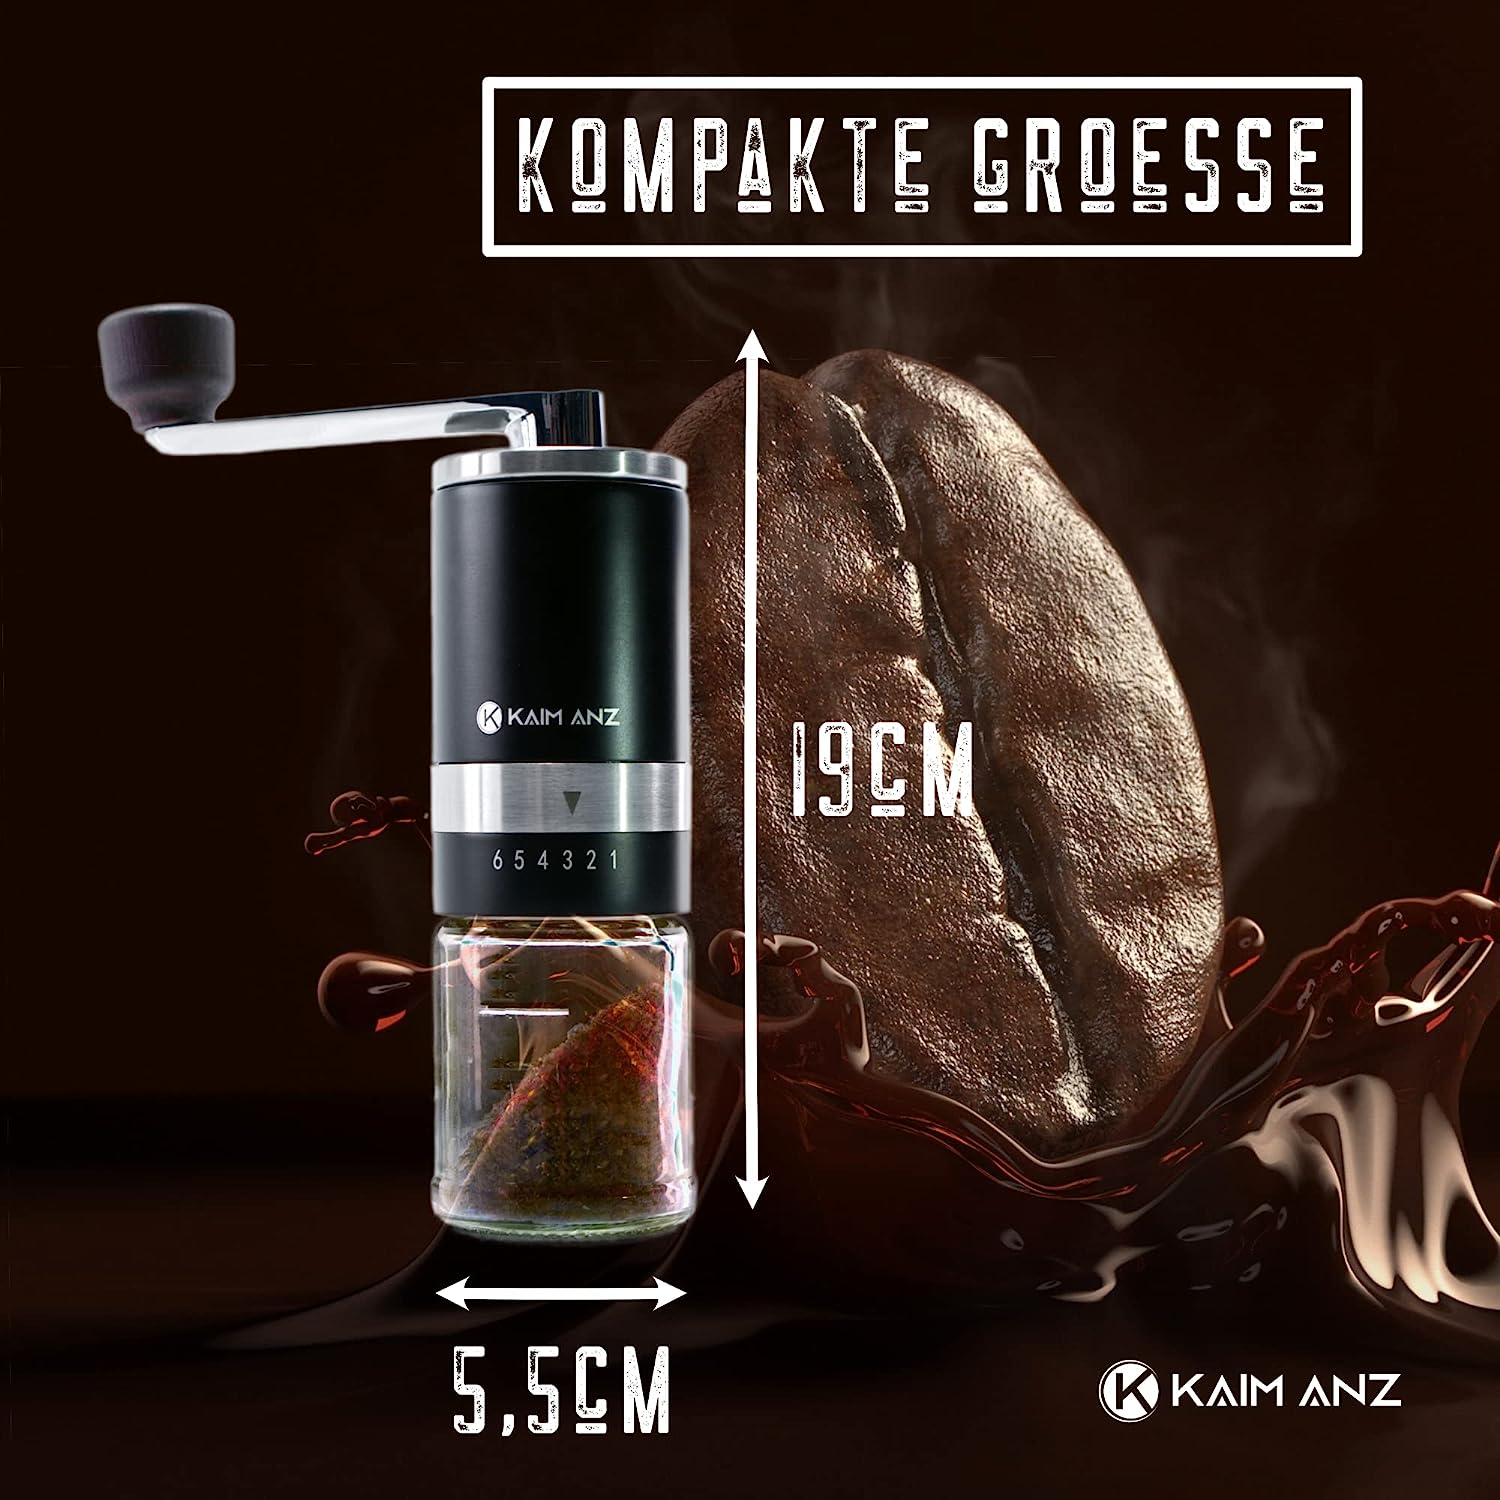 KAIM ANZ Manual Coffee Grinder - 6 Stage Hand Coffee Grinder with Ceramic Cone Grinder - Premium Manual Coffee Grinder - Ergonomically Shaped Espresso Grinder for Excellent Coffee Enjoyment